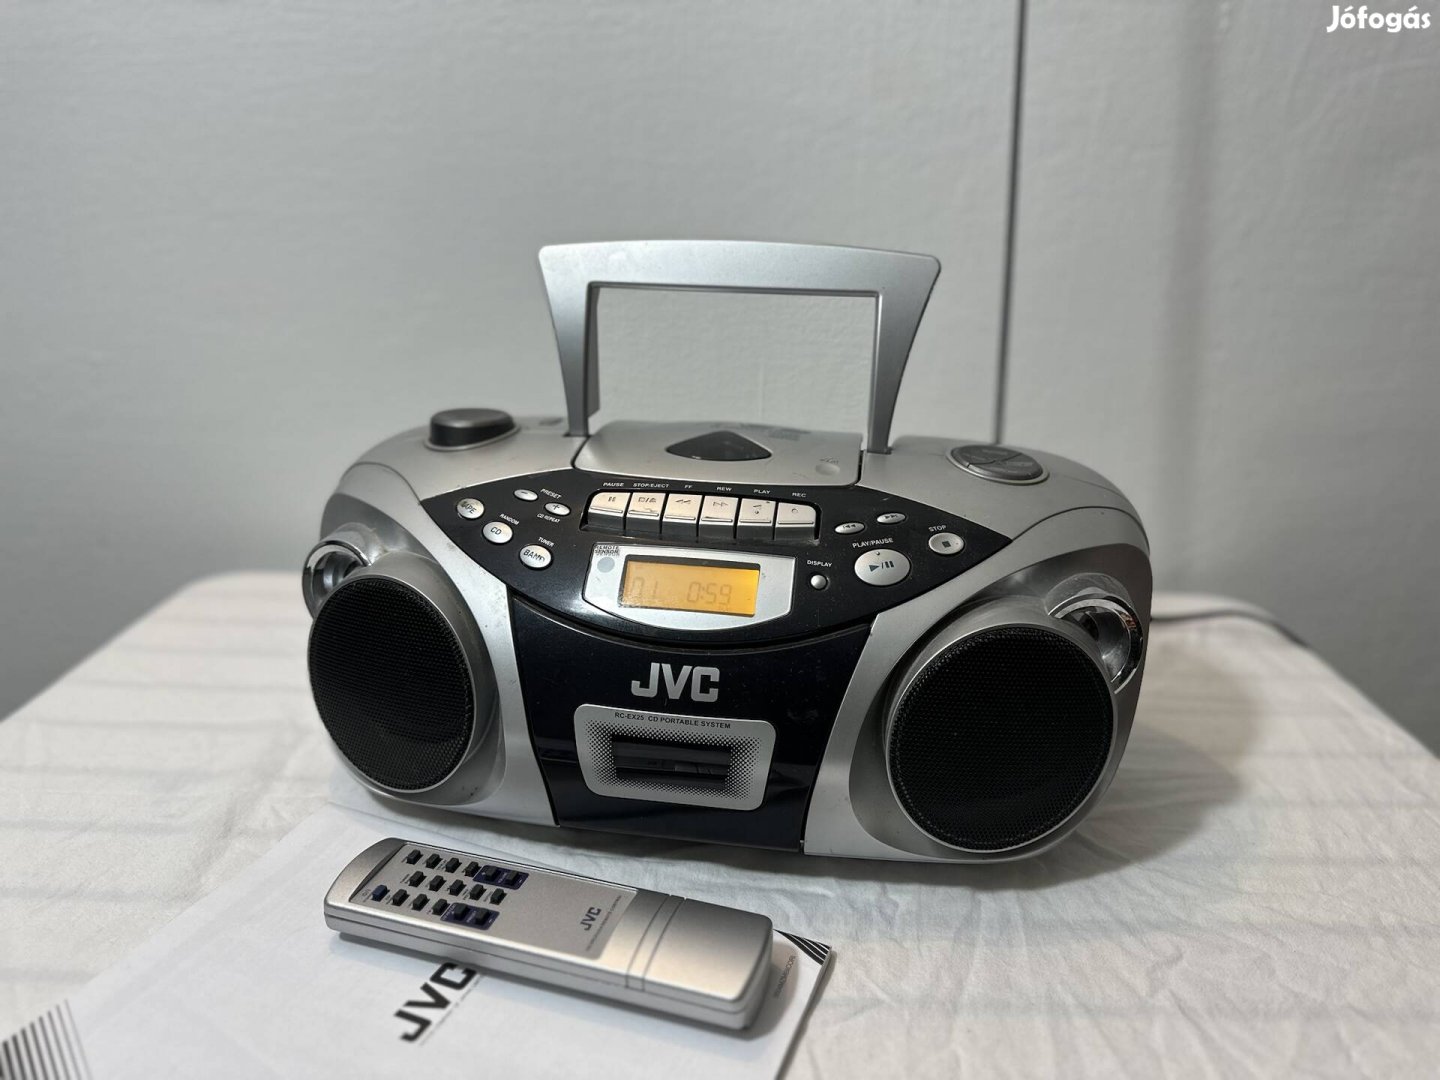 JVC Rcex25 magnó boombox CD hifi hi-fi